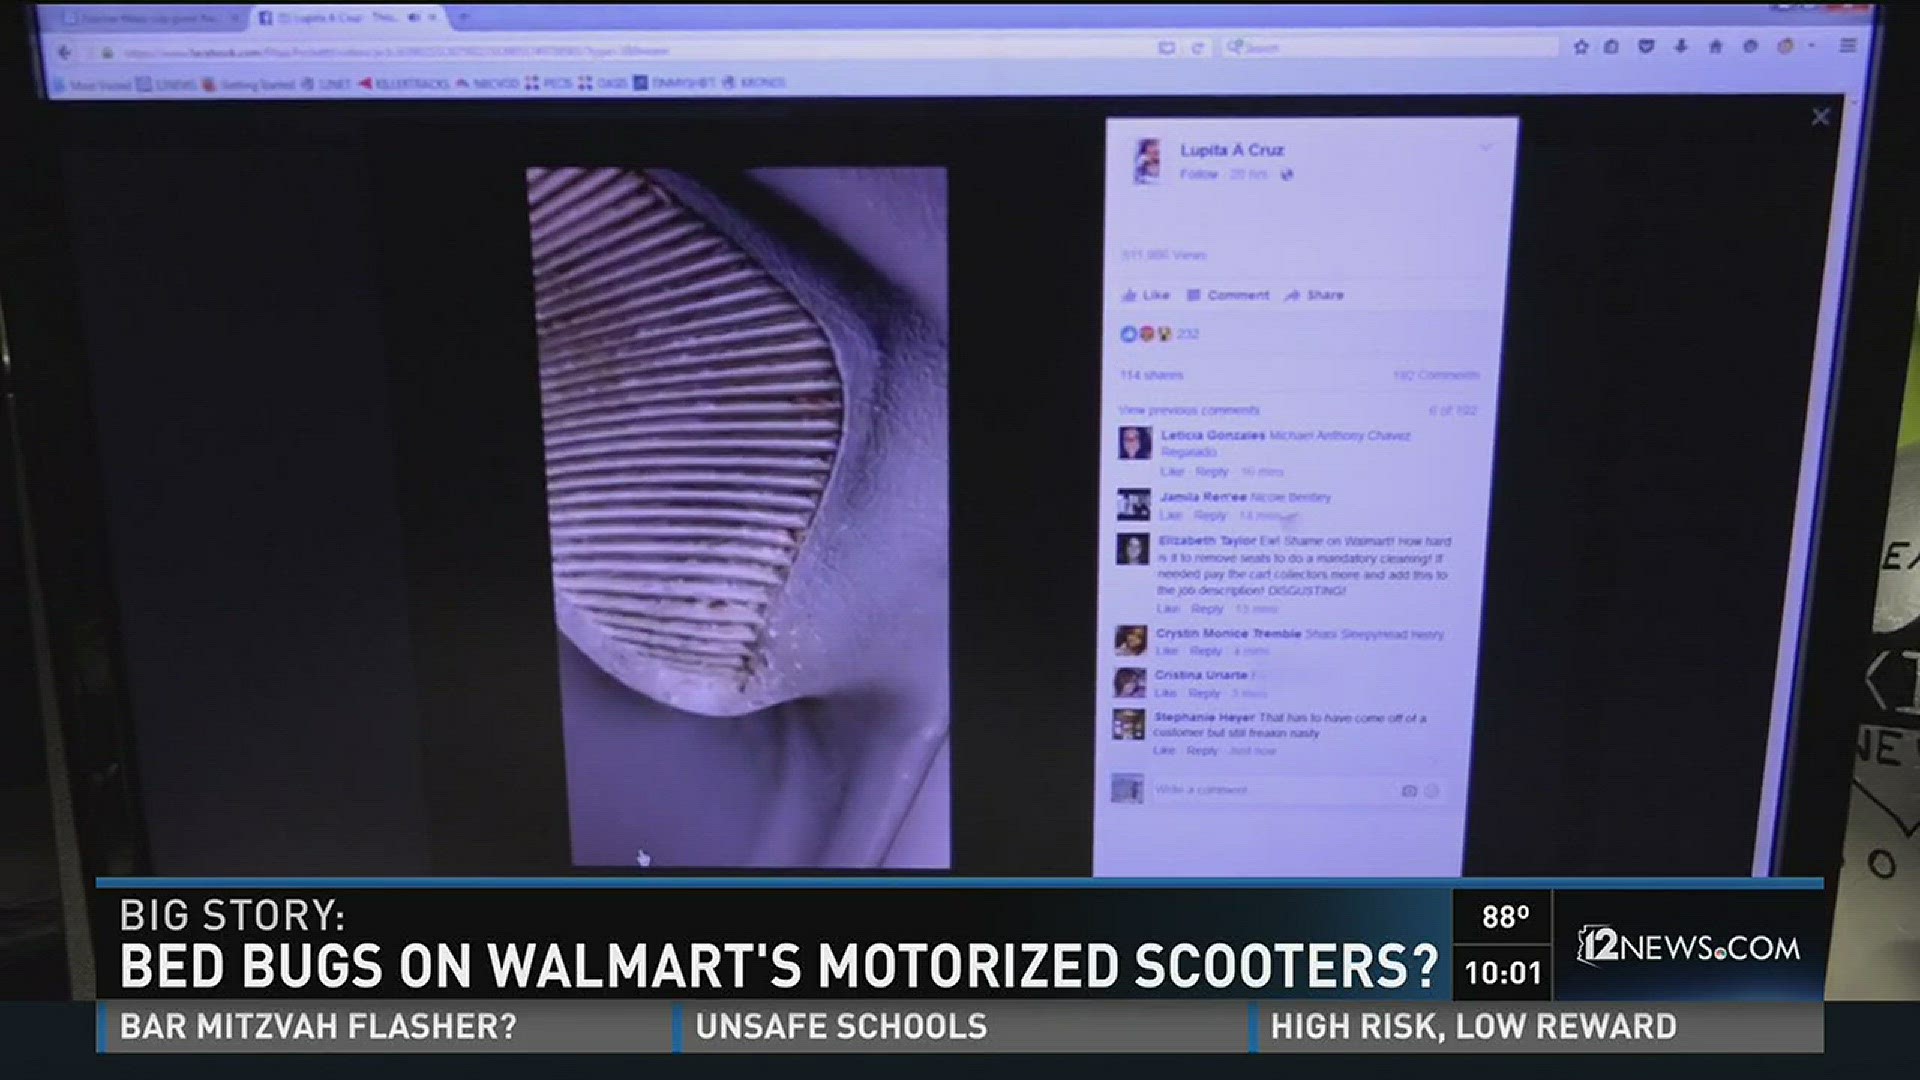 Bed bugs in Walmart's motorized scooter?